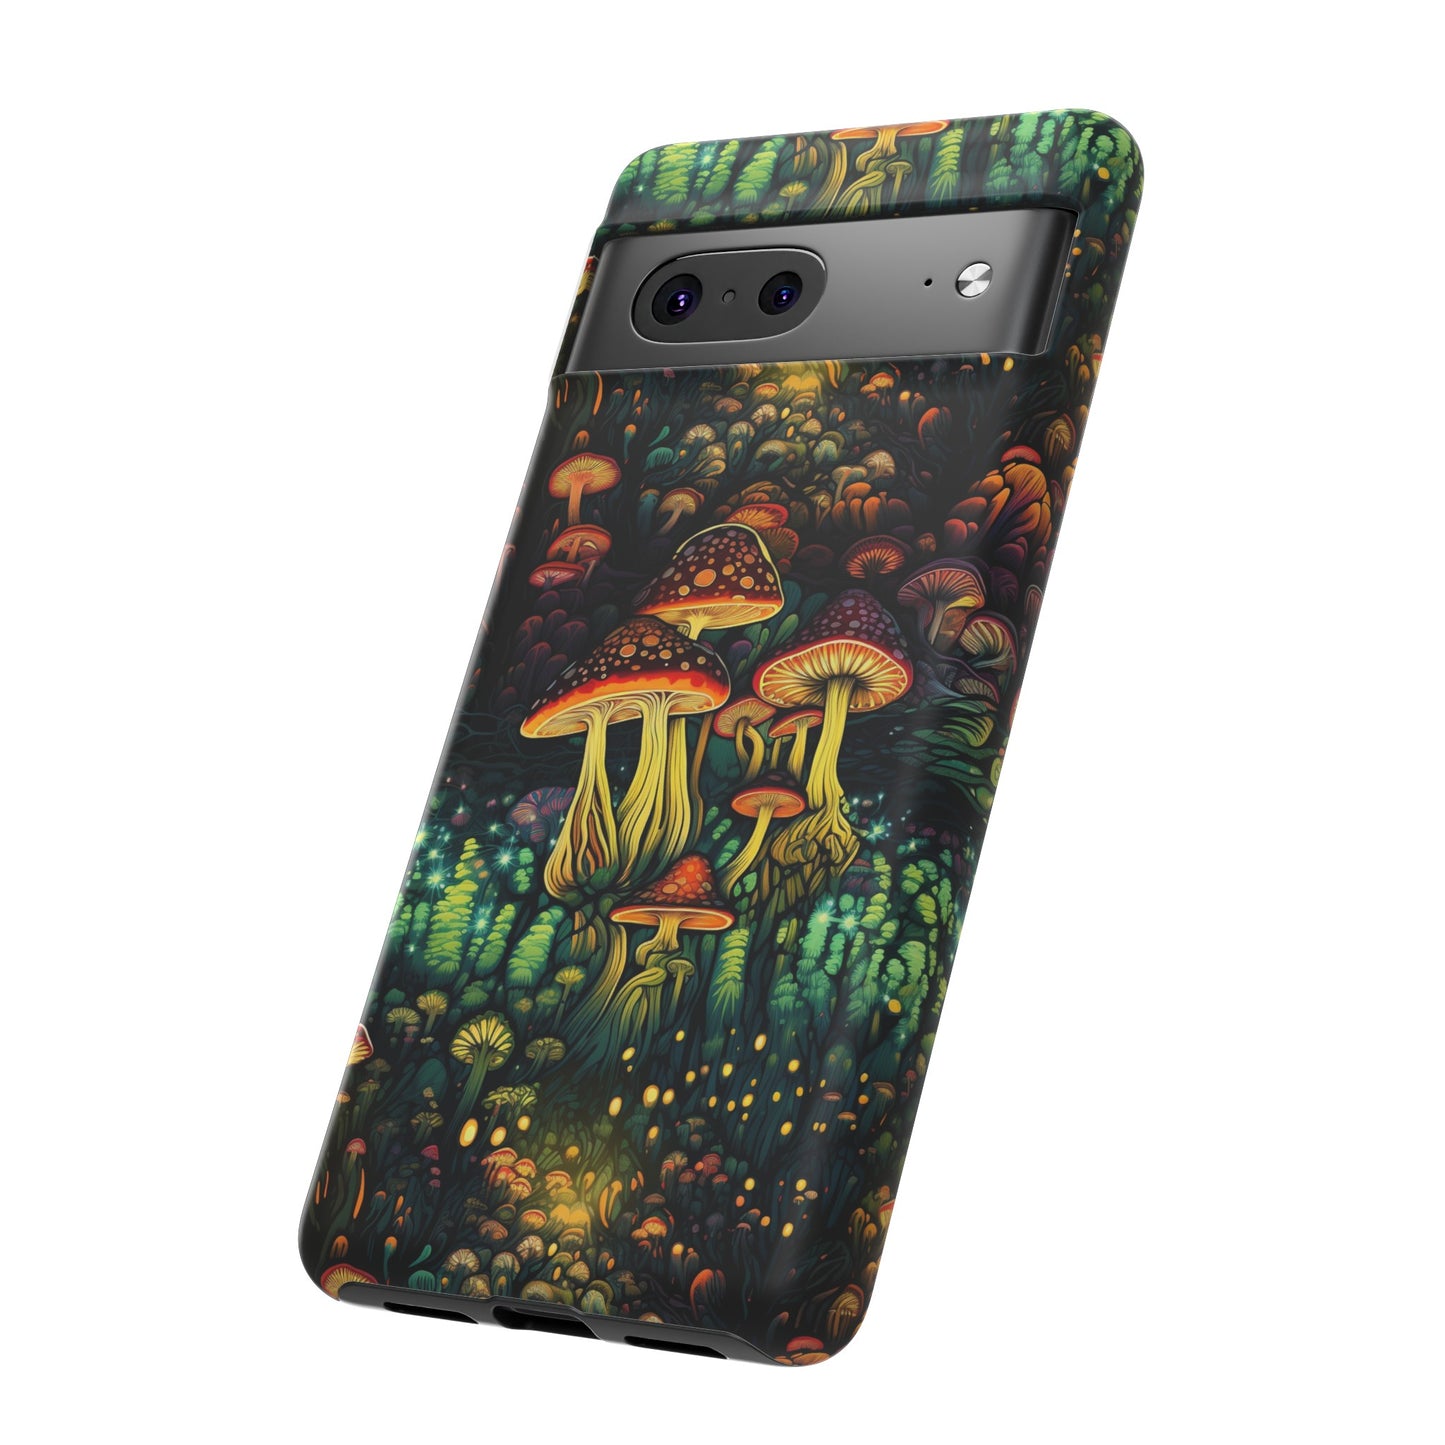 Neon Hallucinations: An Illuminated Autumn Spectacle - Tough Phone Case